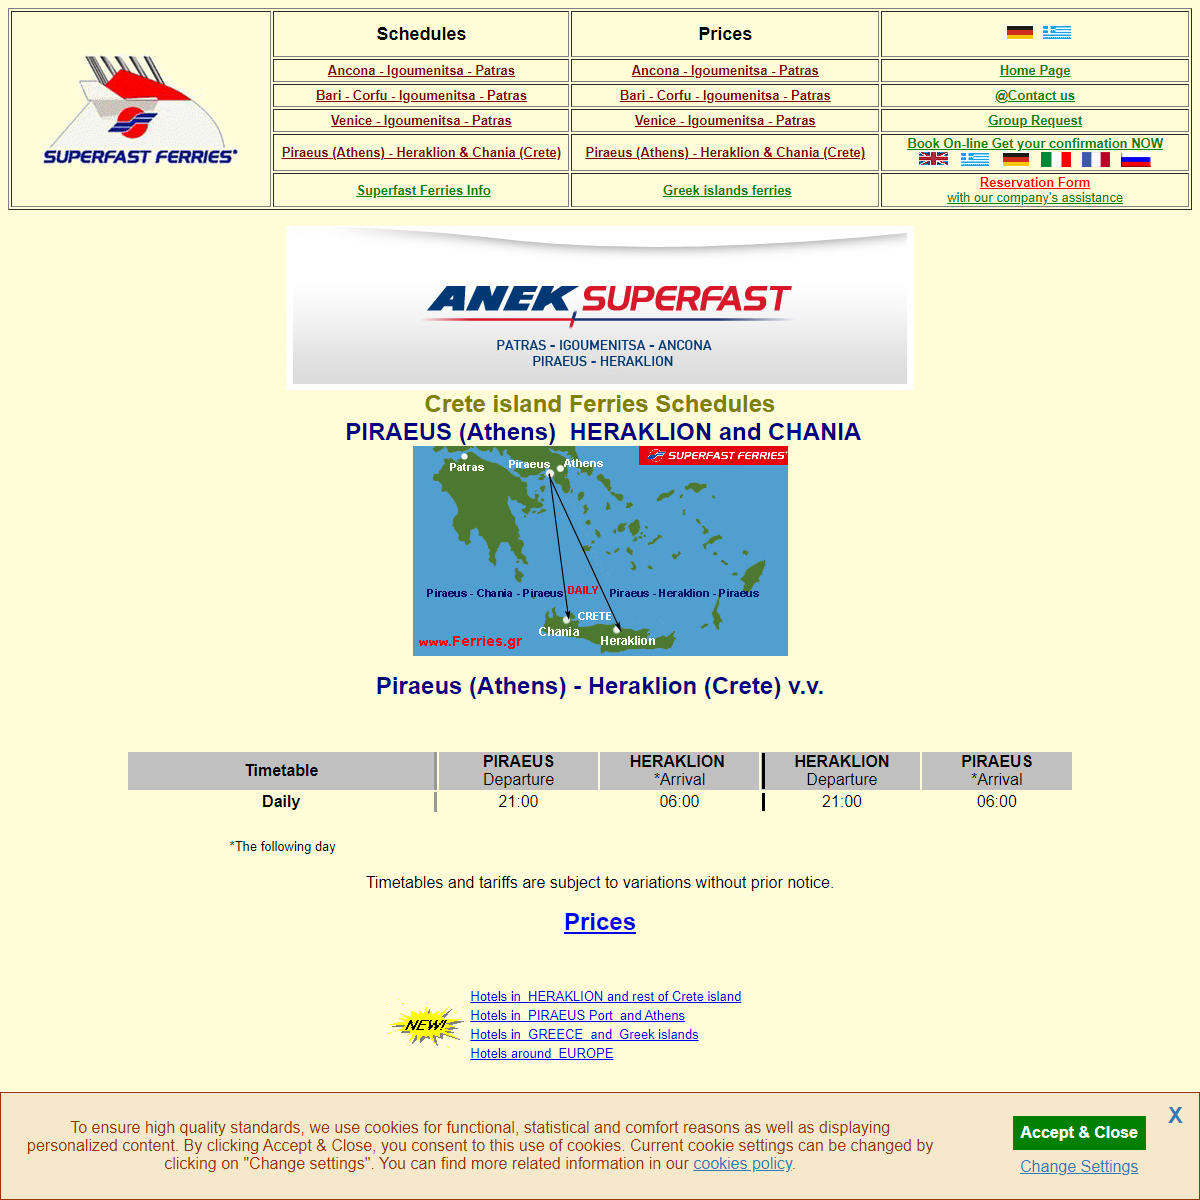 A complete backup of https://www.ferries.gr/superfastferries/schedules-piraeus-heraklion.htm